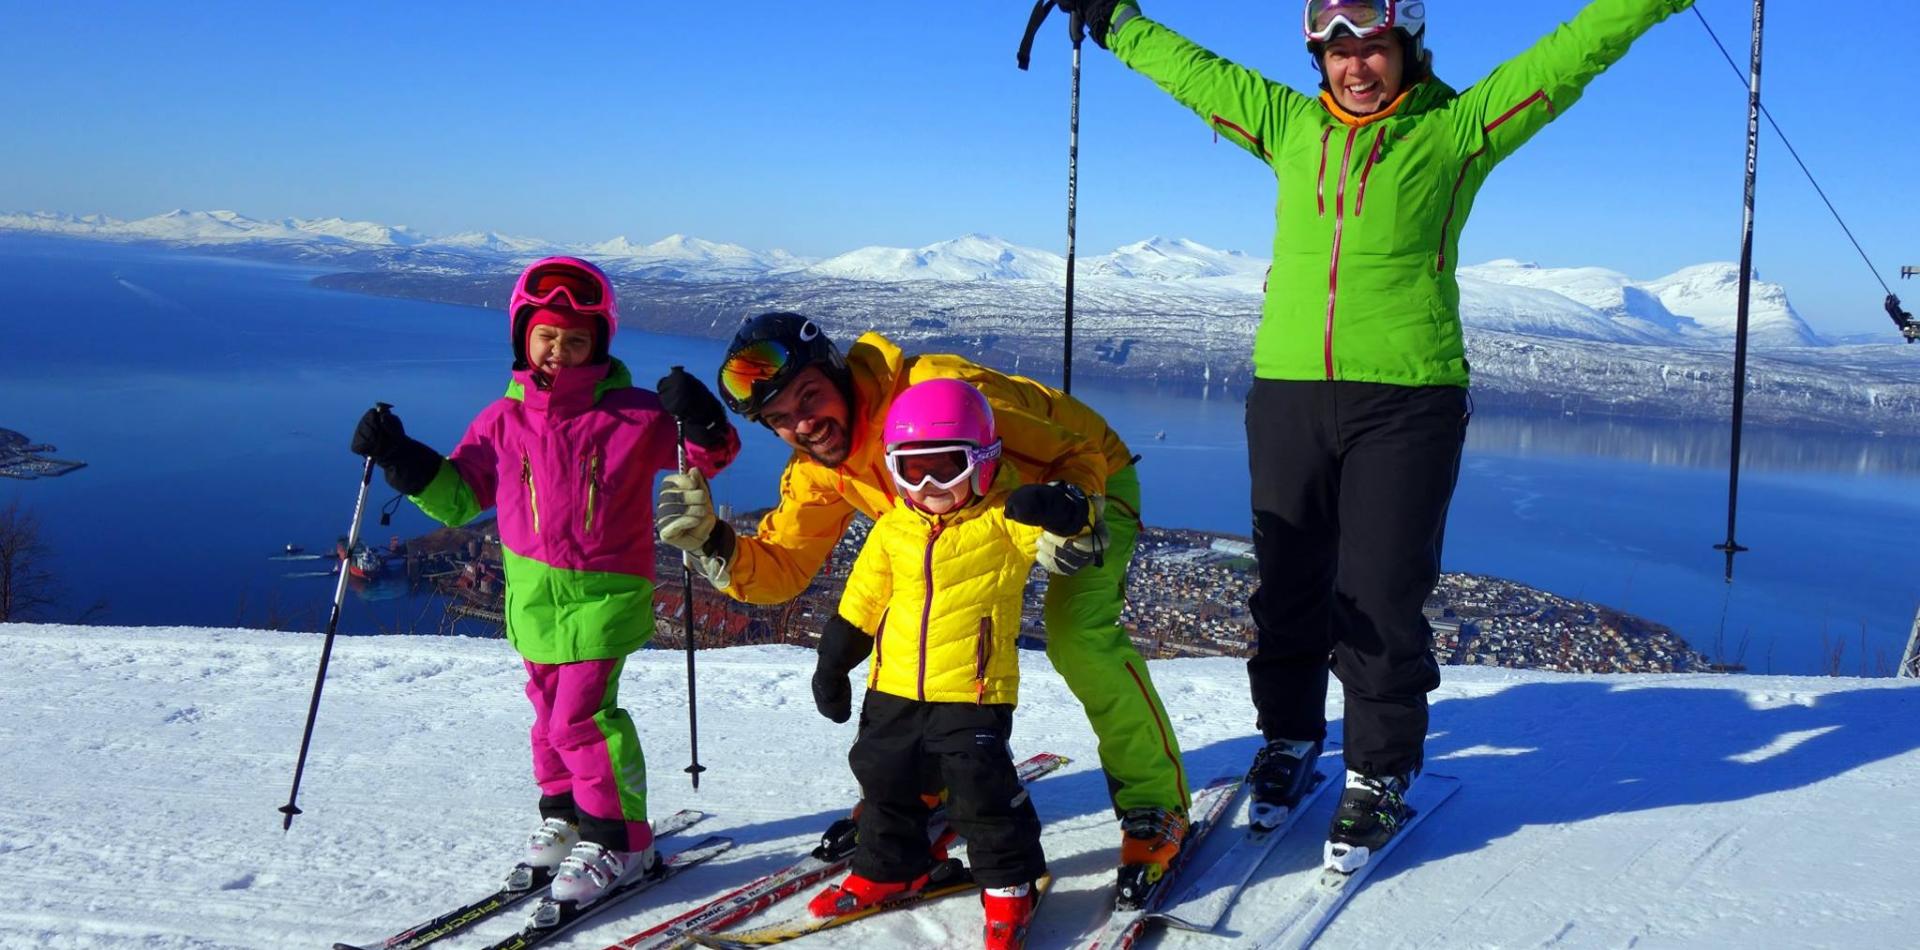 Narvikjellet Ski Resort